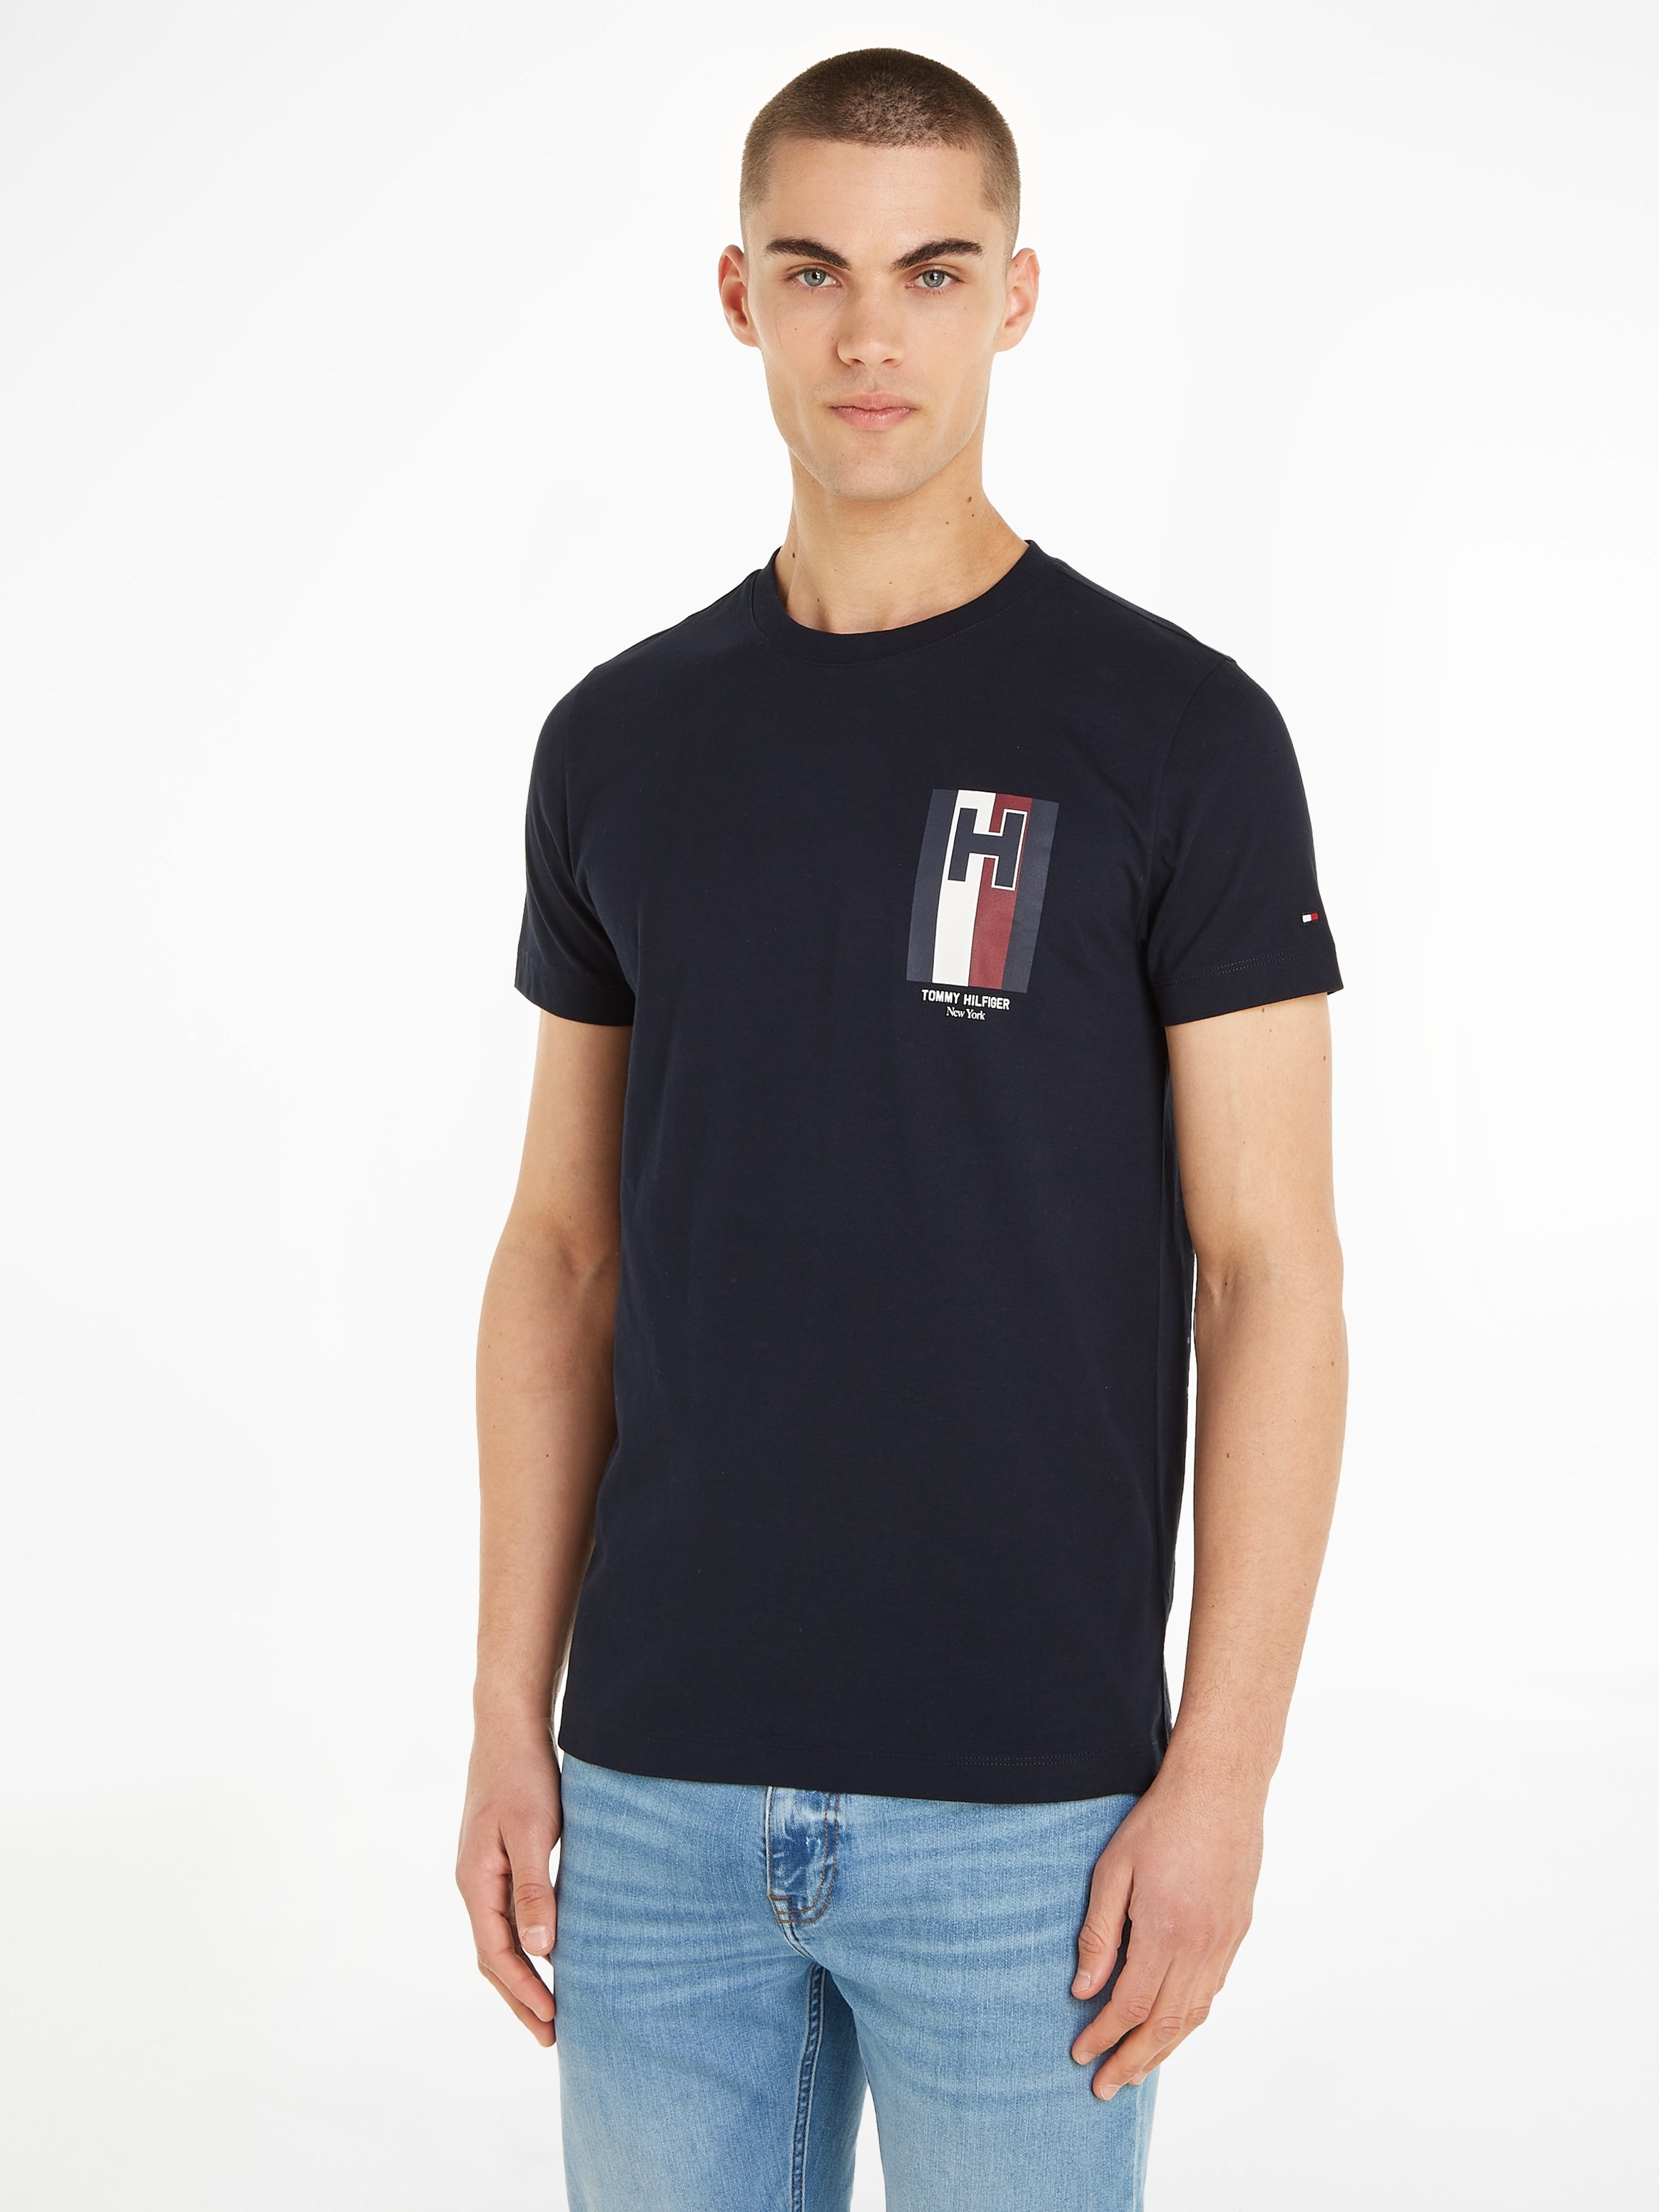 T-Shirt online Tommy gedrucktem EMBLEM »H bestellen mit TEE«, Logo Hilfiger